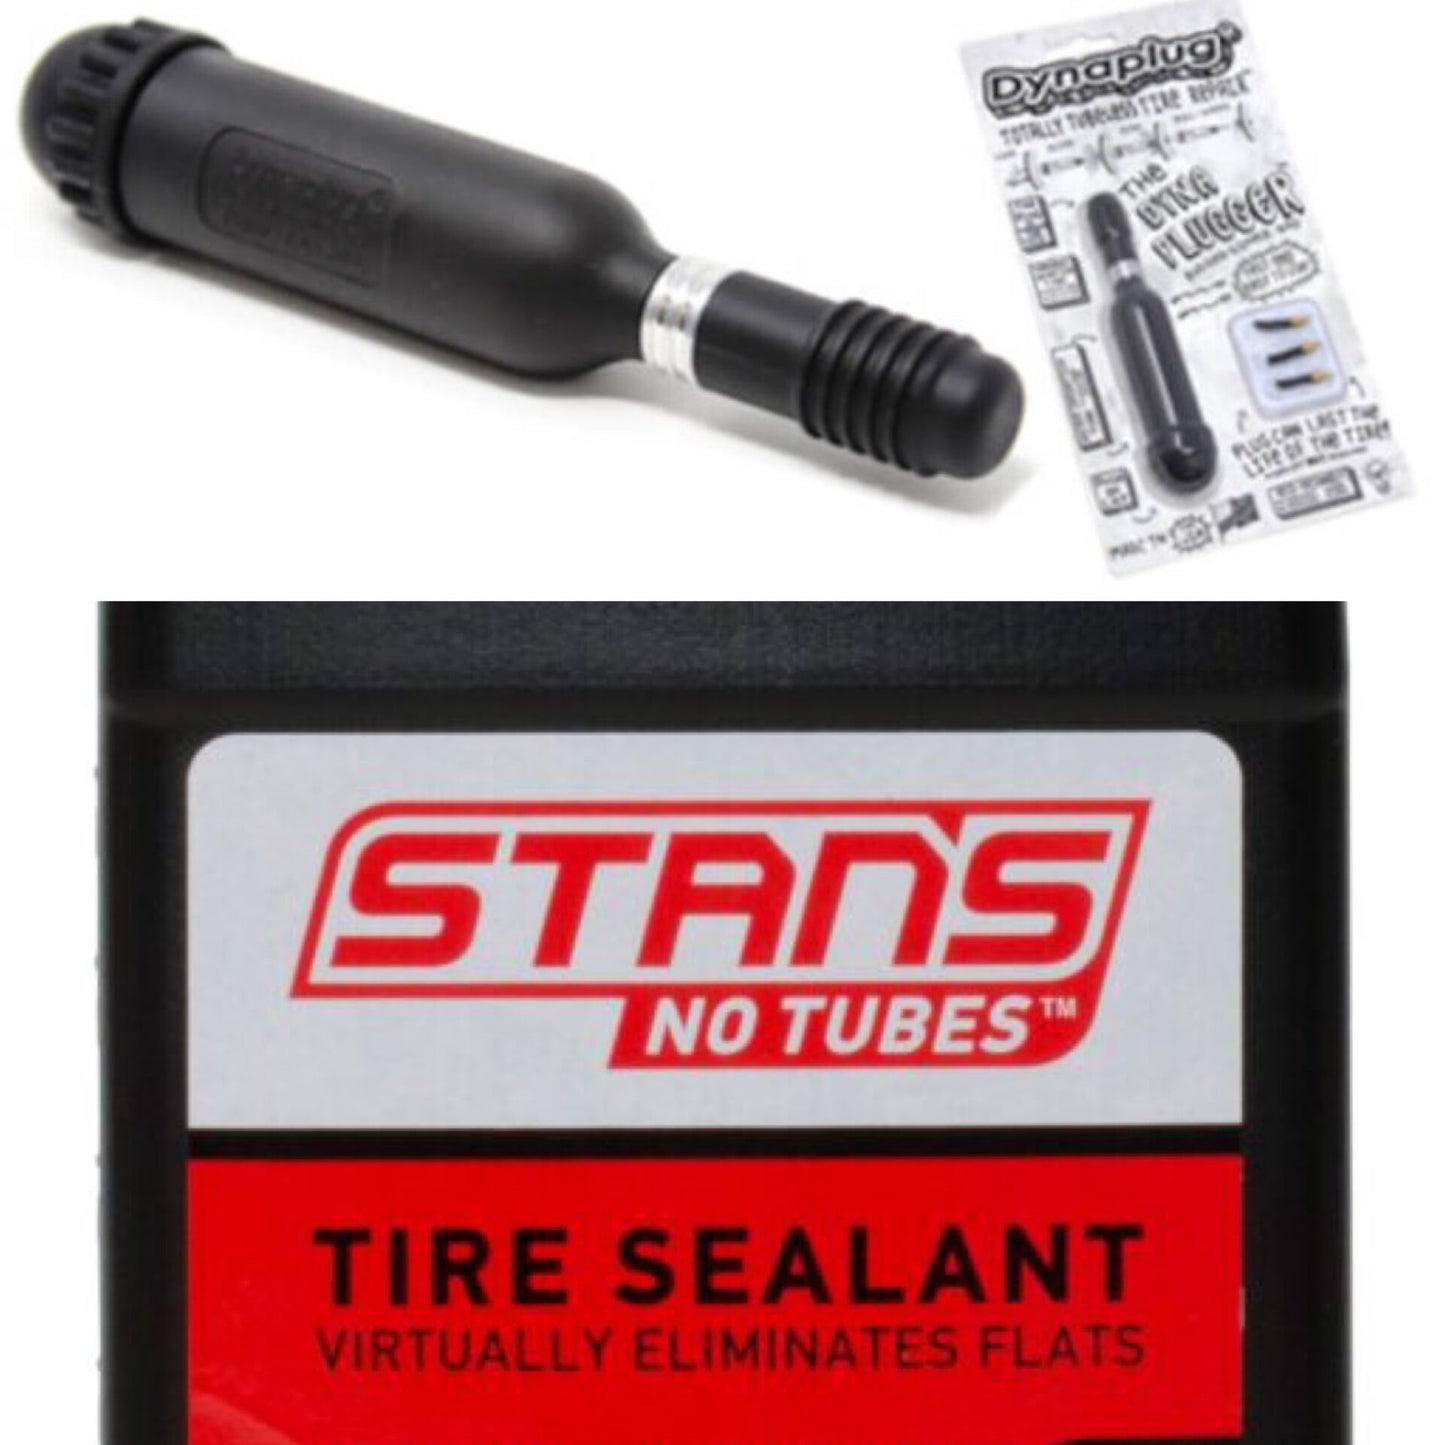 Dynaplug Stan's sealant tubeless kit